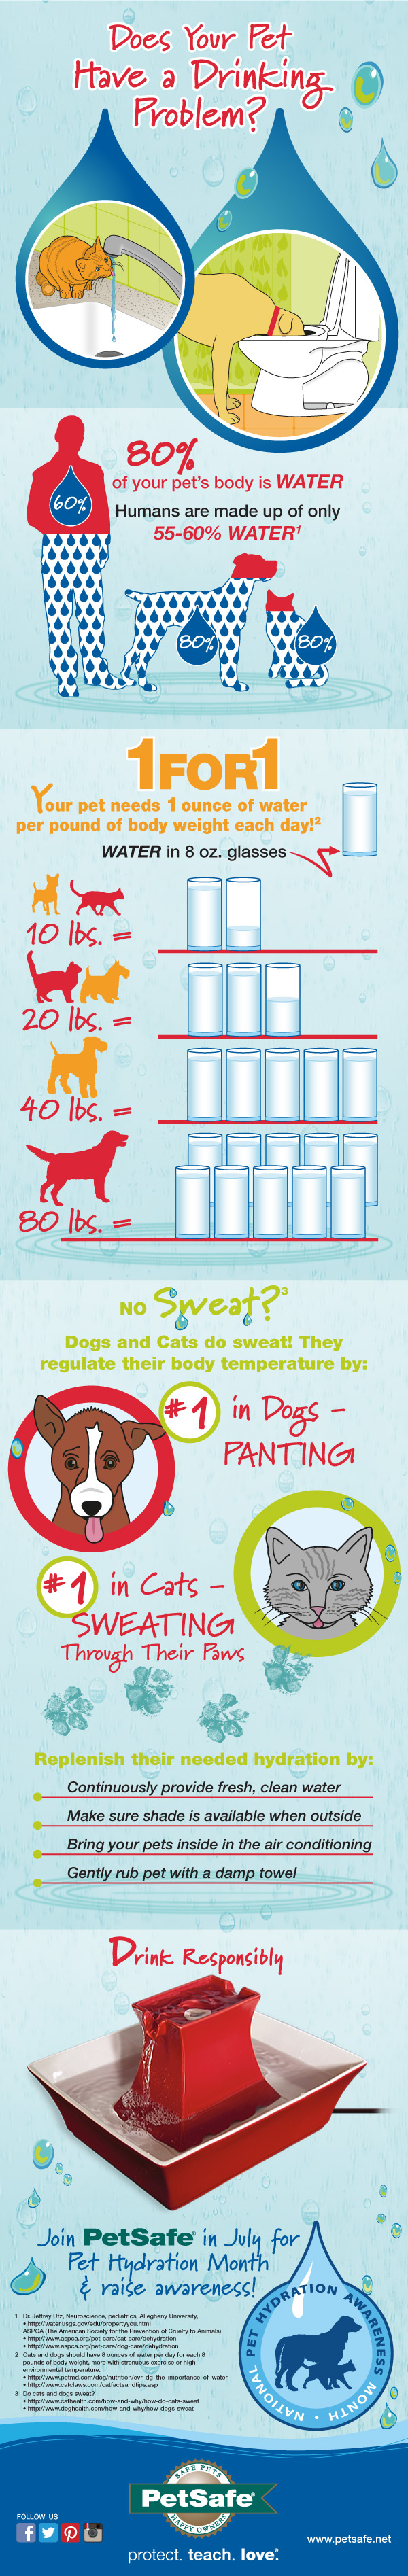 PetSafe_Pet Hydration Month Infographic 2015